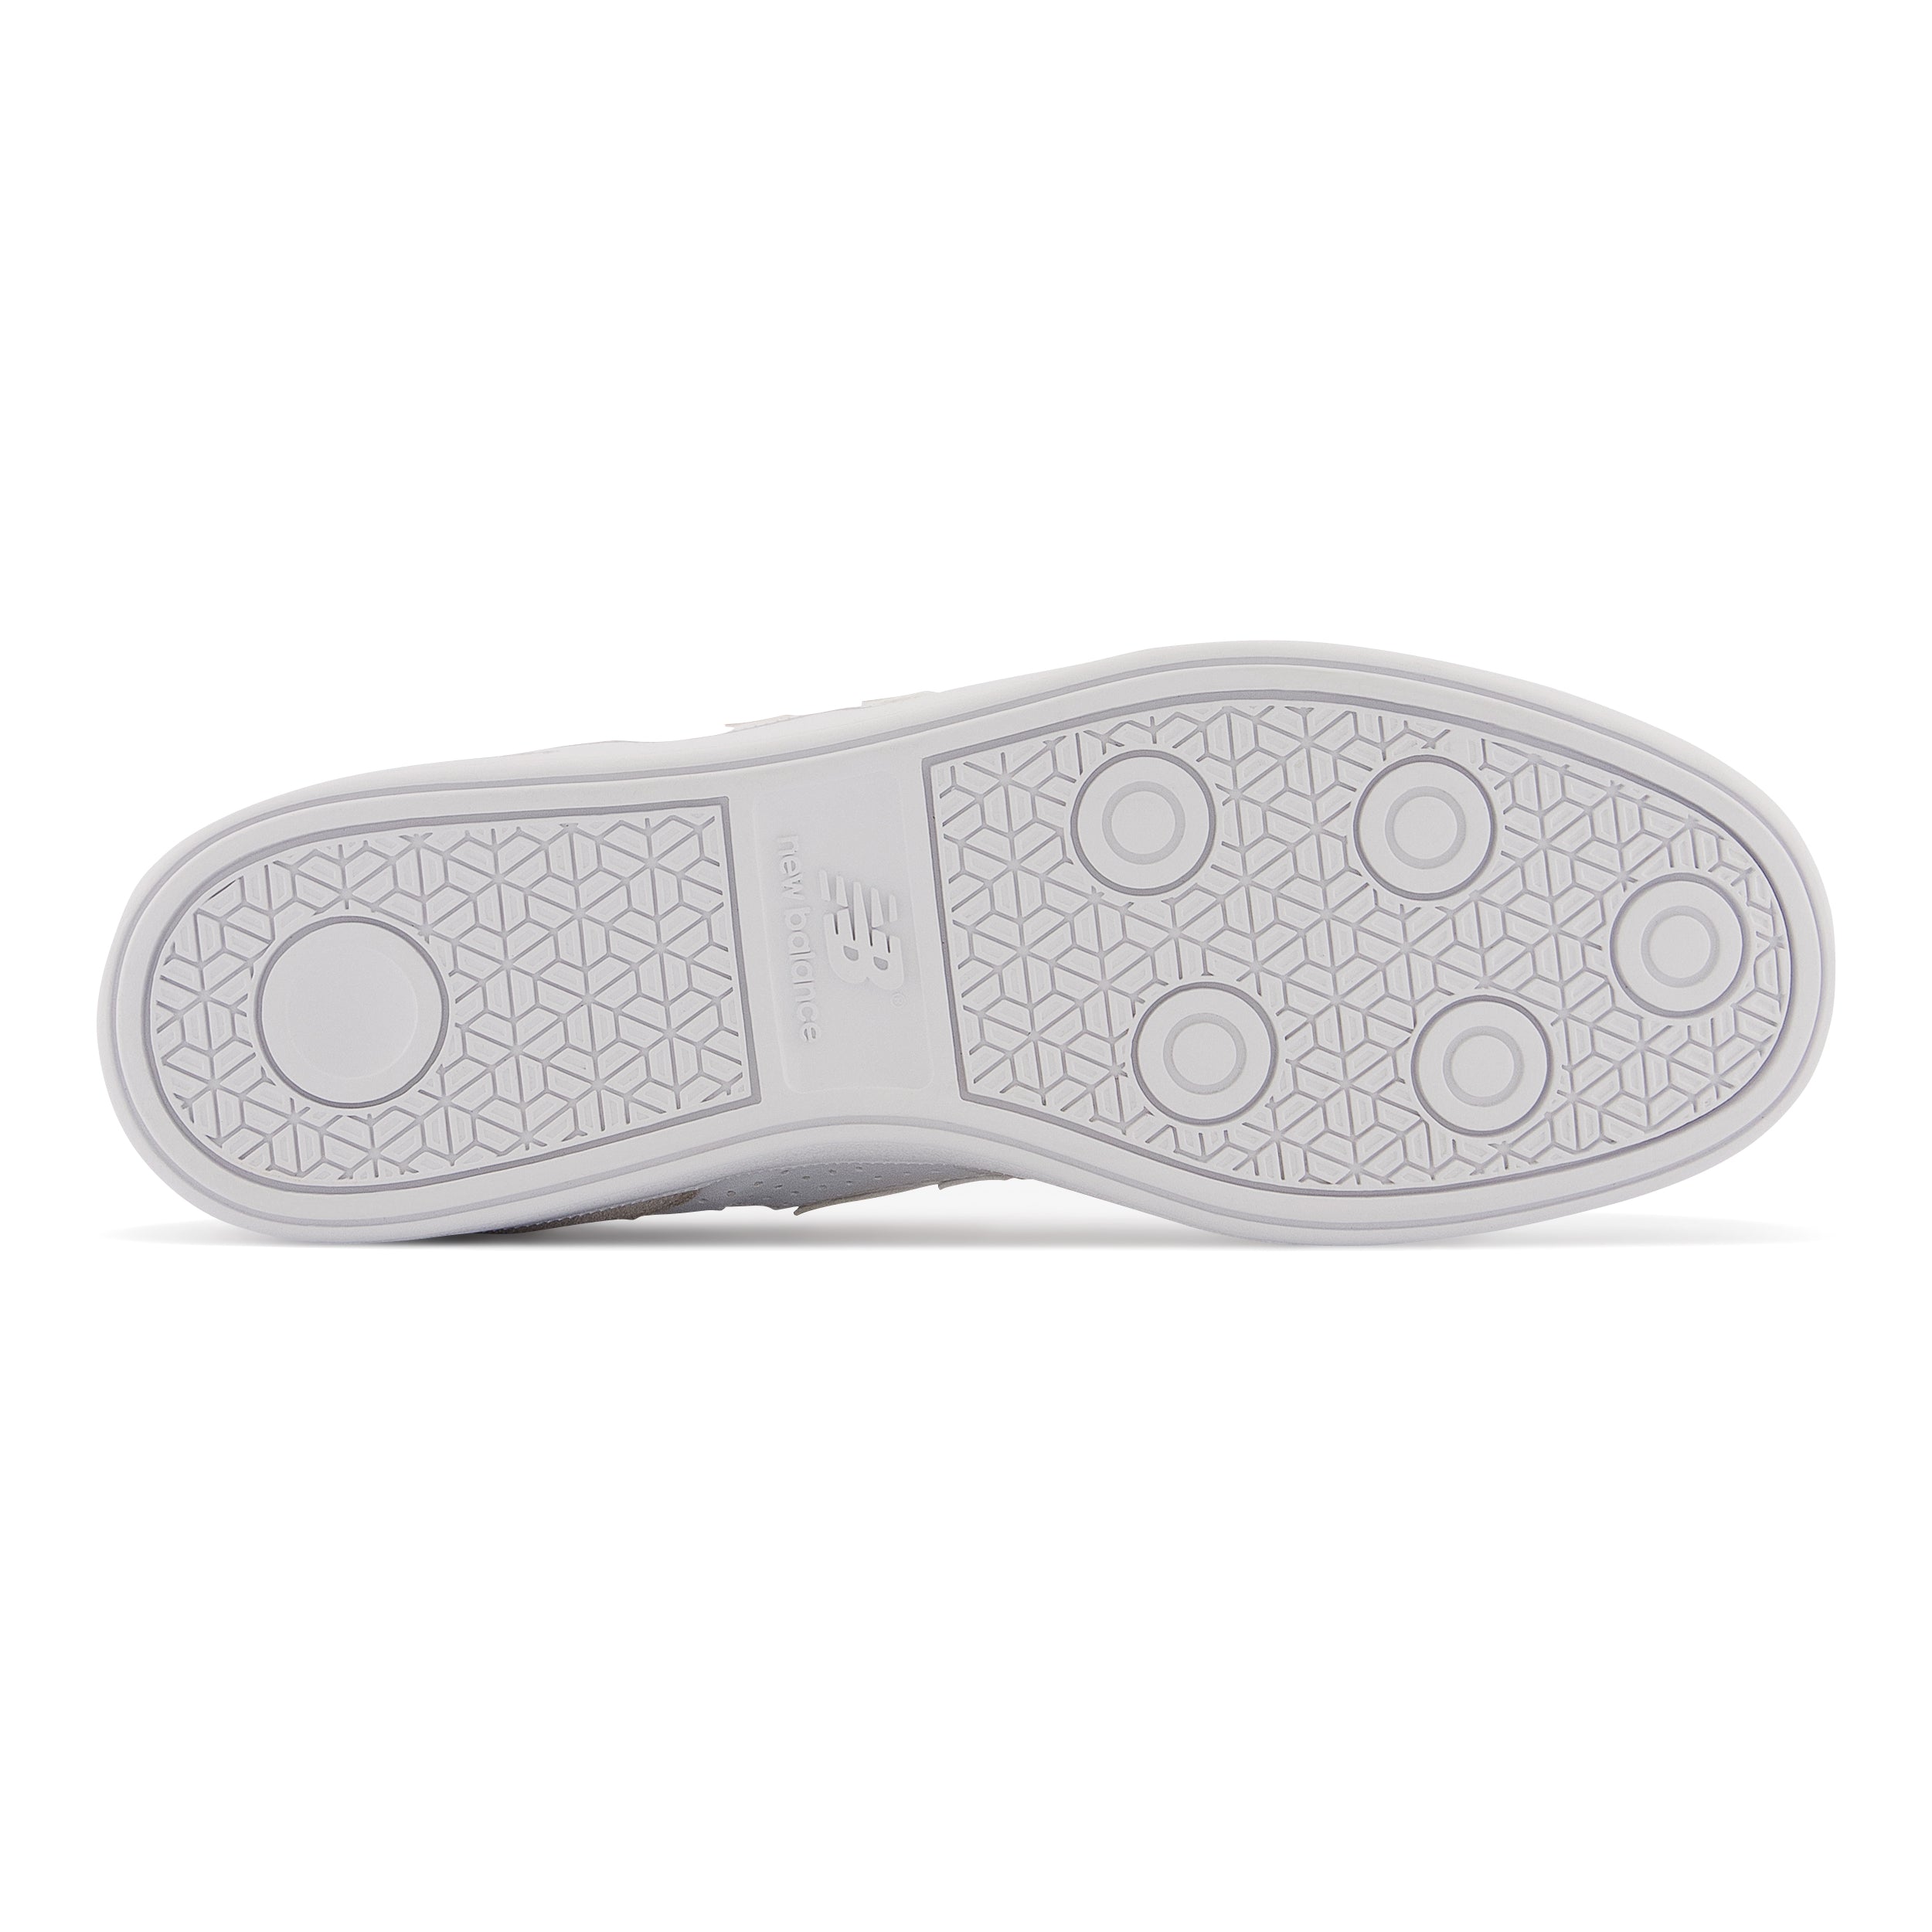 White/Tan NM508 Westgate NB Numeric Skateboard Shoe Bottom